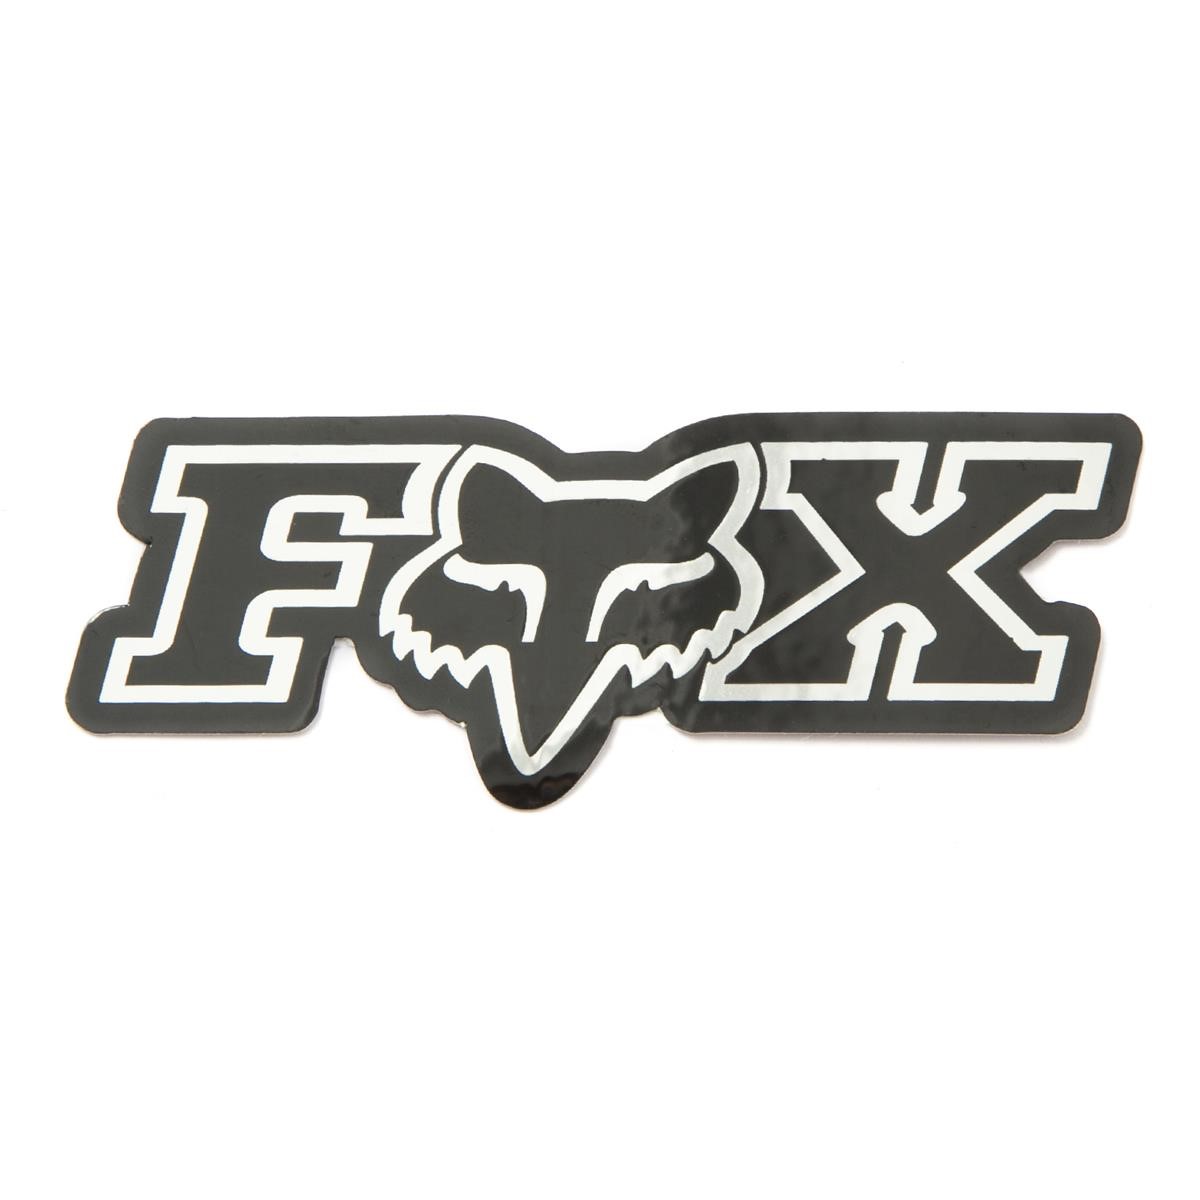 Fox Adesivo Corporate Chrome - 7.5 cm